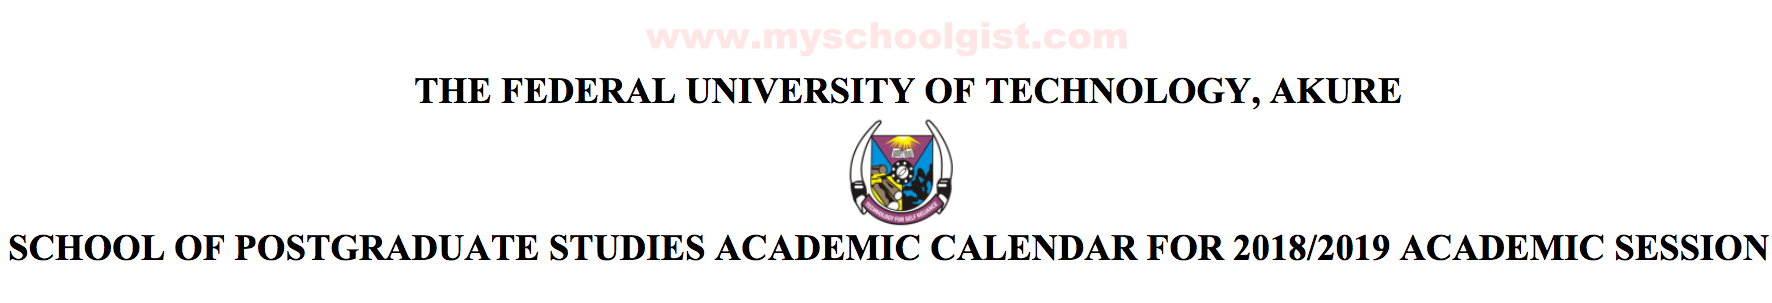 futa-postgraduate-academic-calendar-2018-2019